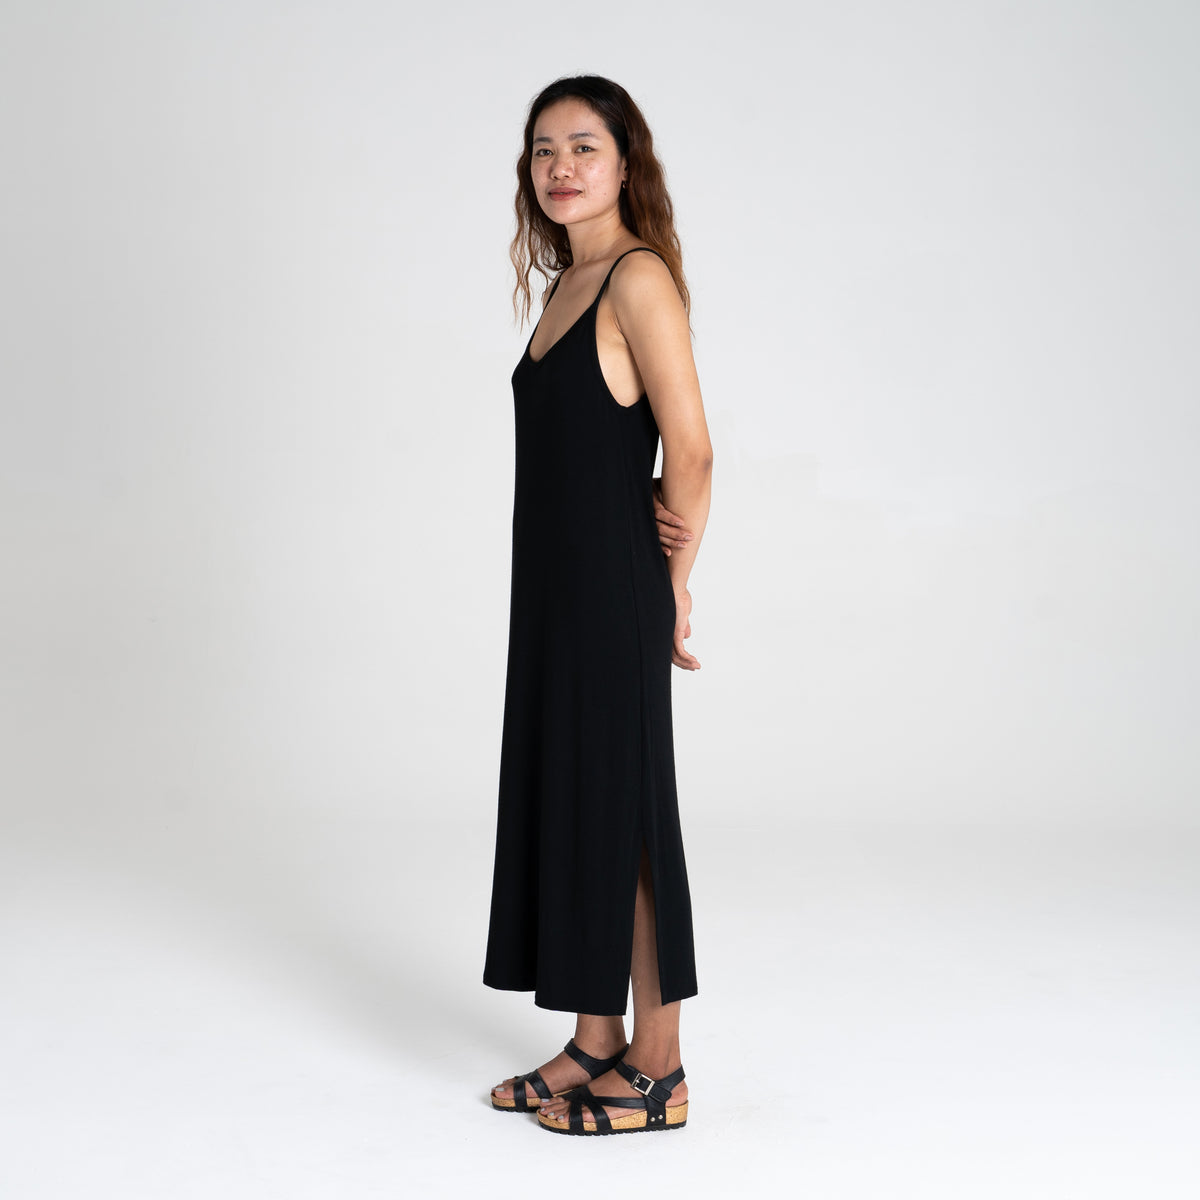 Dorsu | Singlet Dress Black | Ethical Fashion | Front